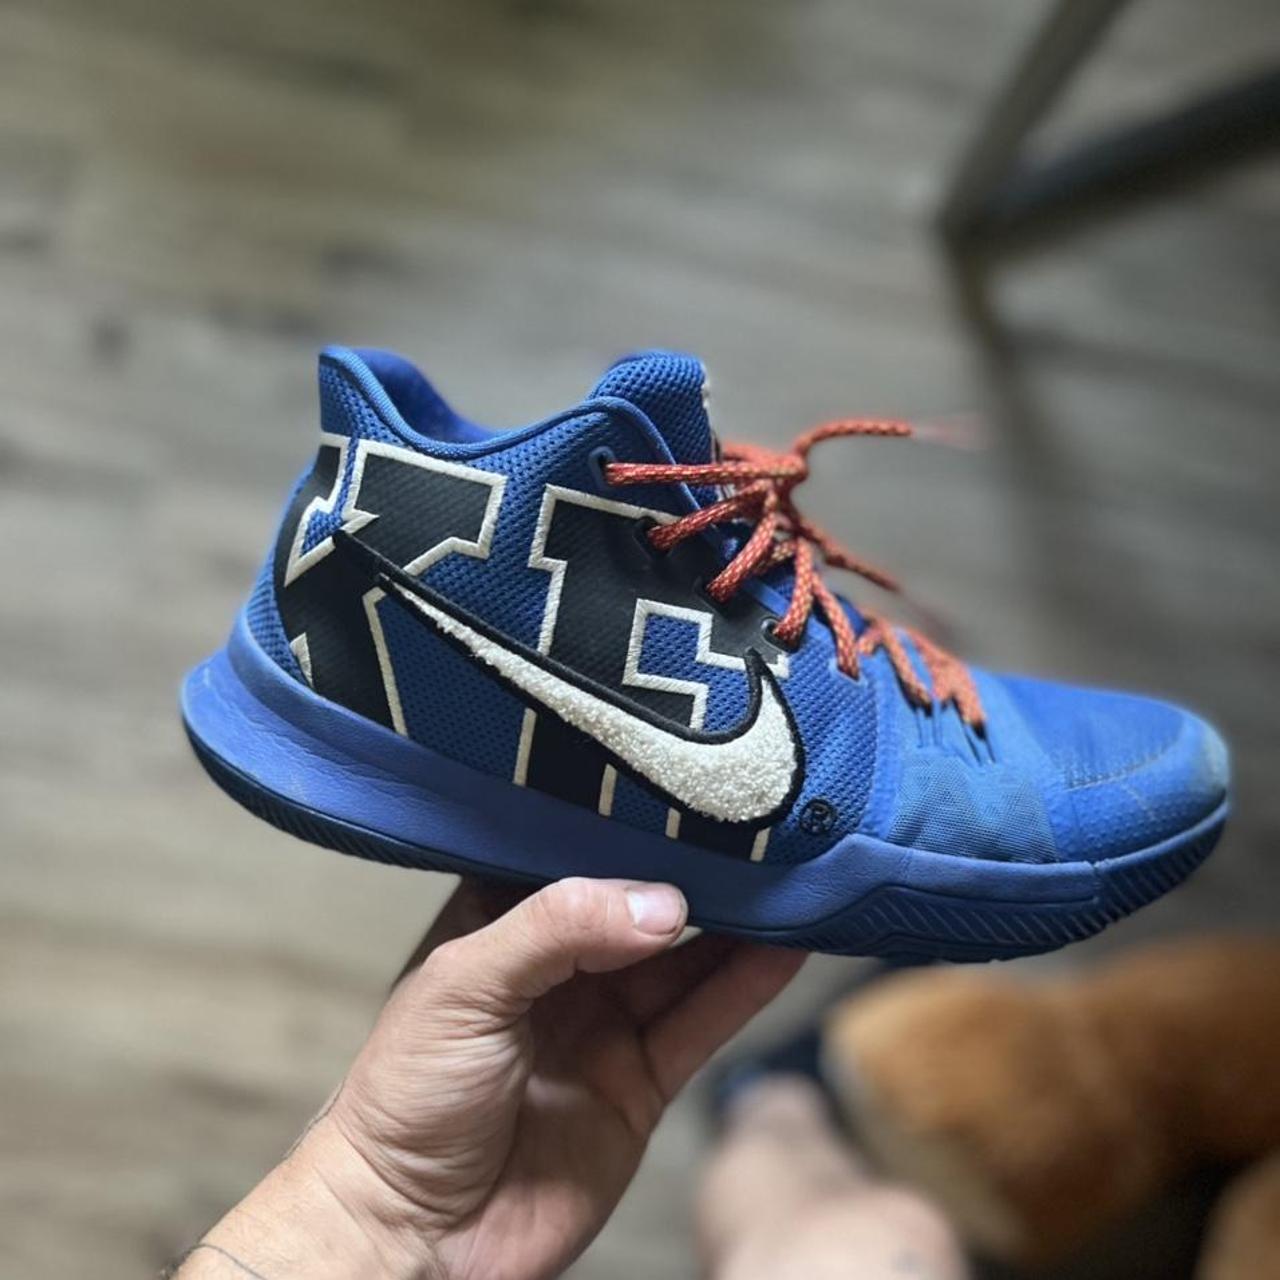 Kyrie Irving 3 (duke edition) basketball shoes!!